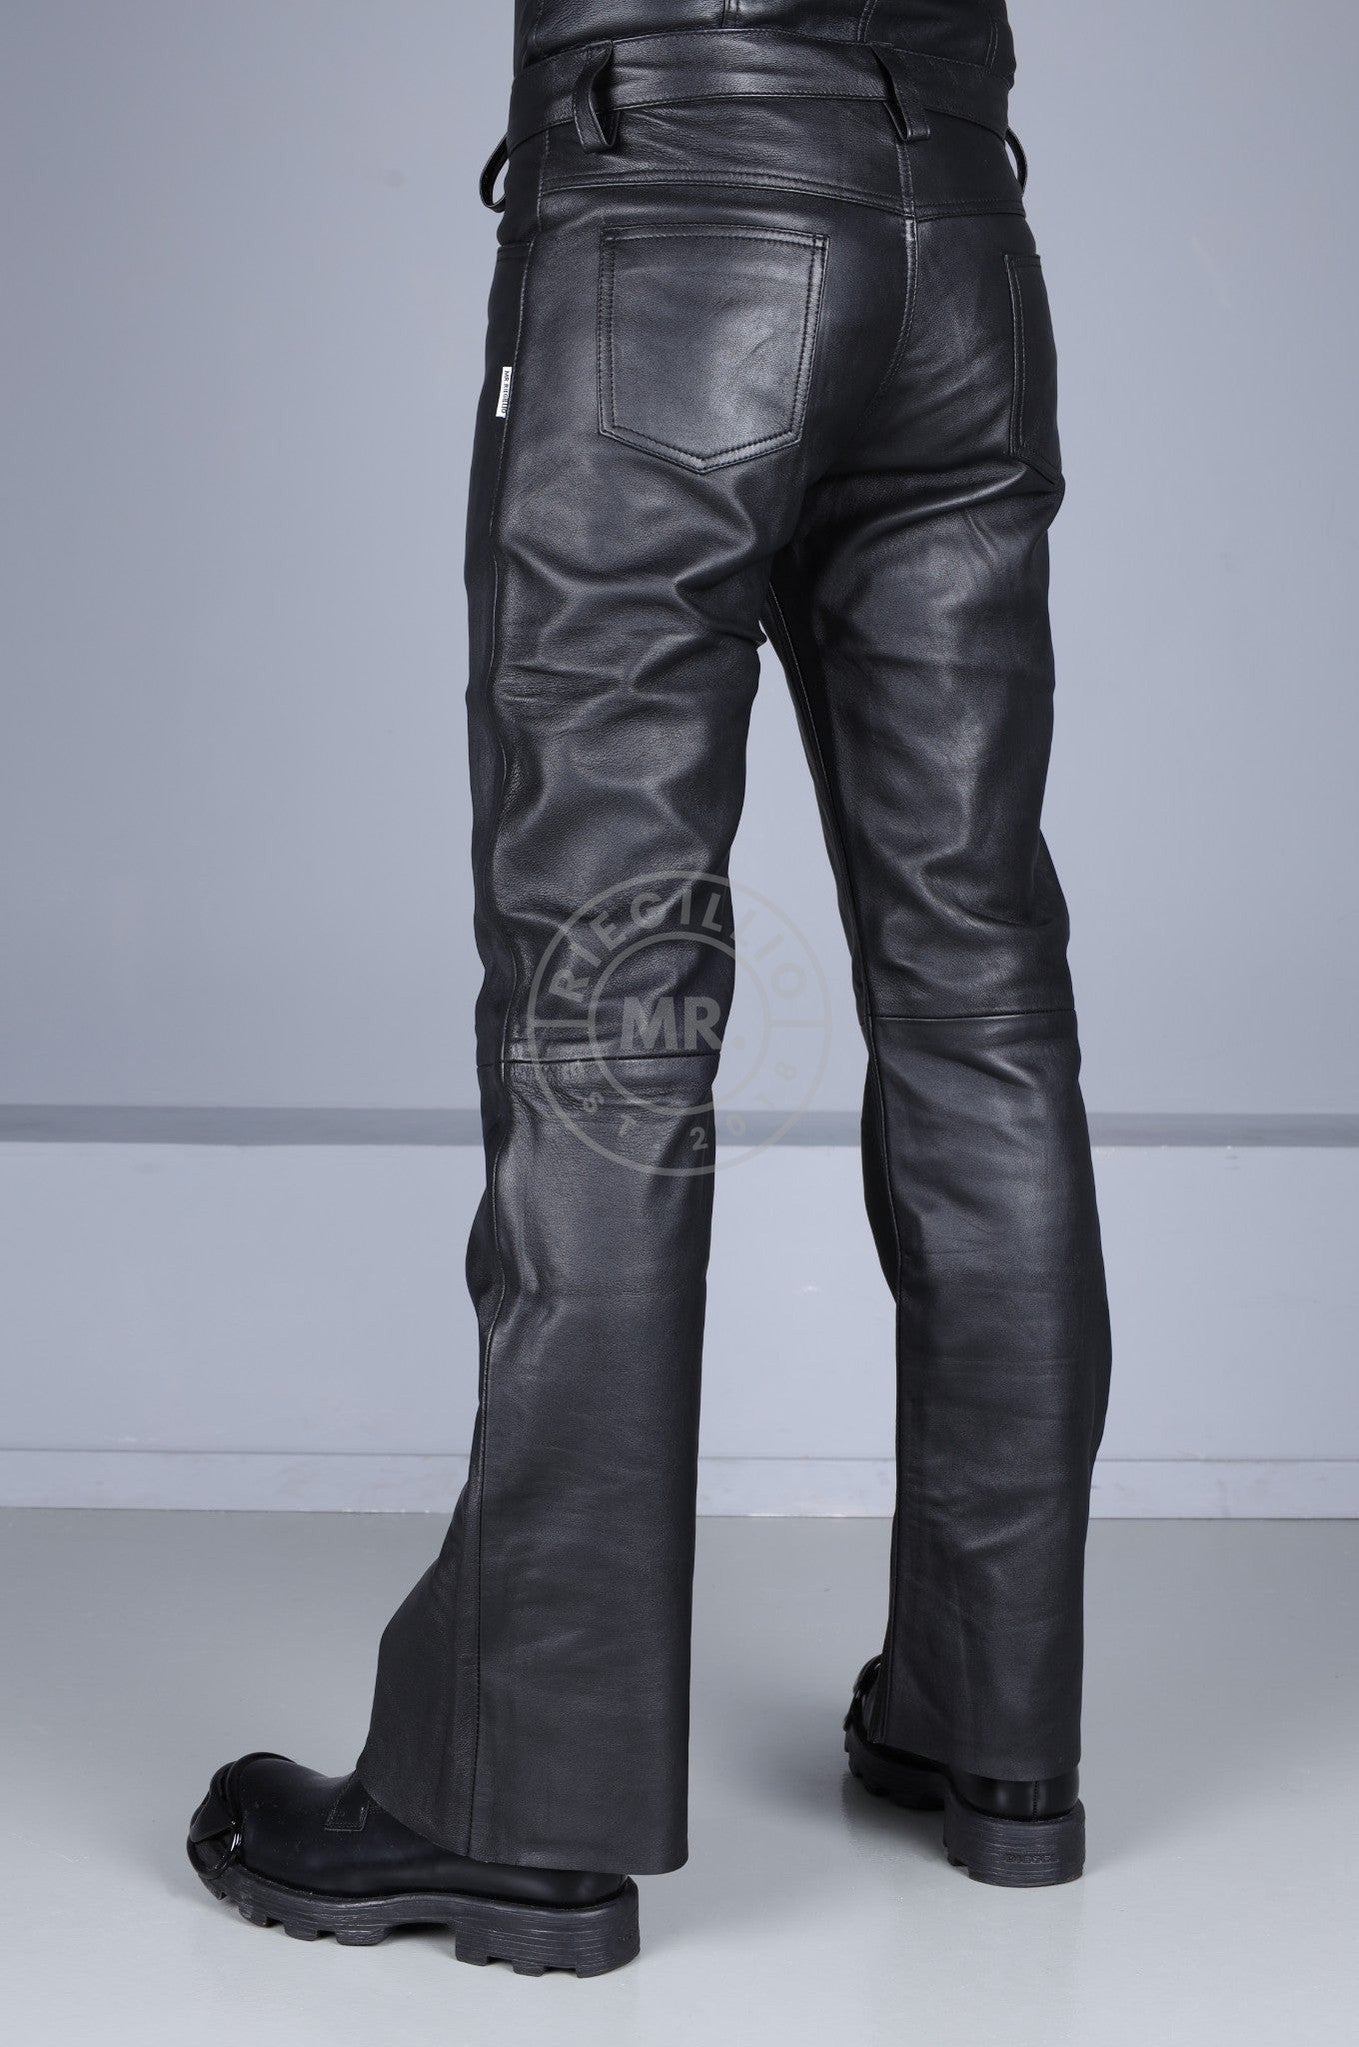 Black Leather Bootcut Pants at MR. Riegillio